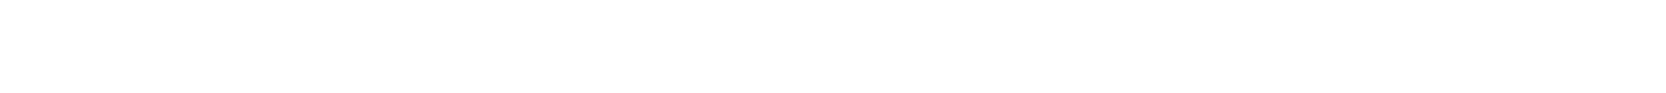 JJG Surrey logo